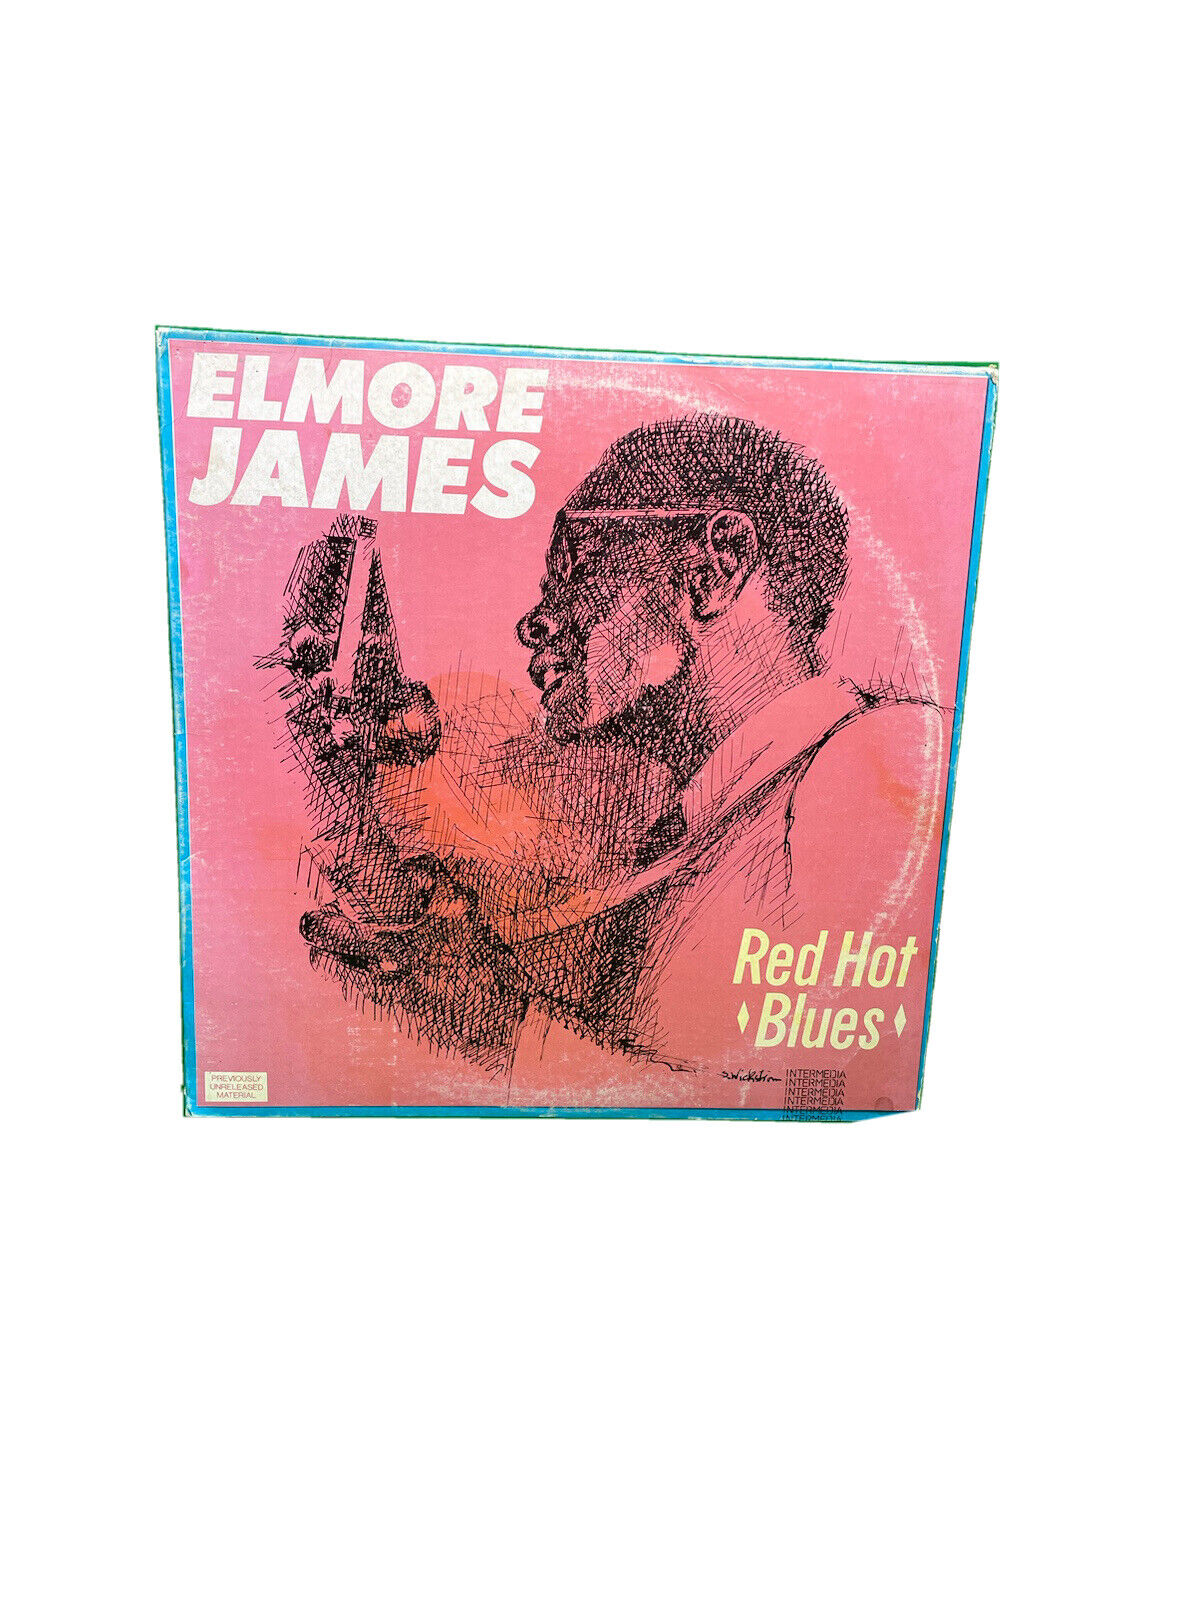 ELMORE JAMES Red Hot Blues Intermedia Vinyl LP 1982? QS-5034 G+ VG